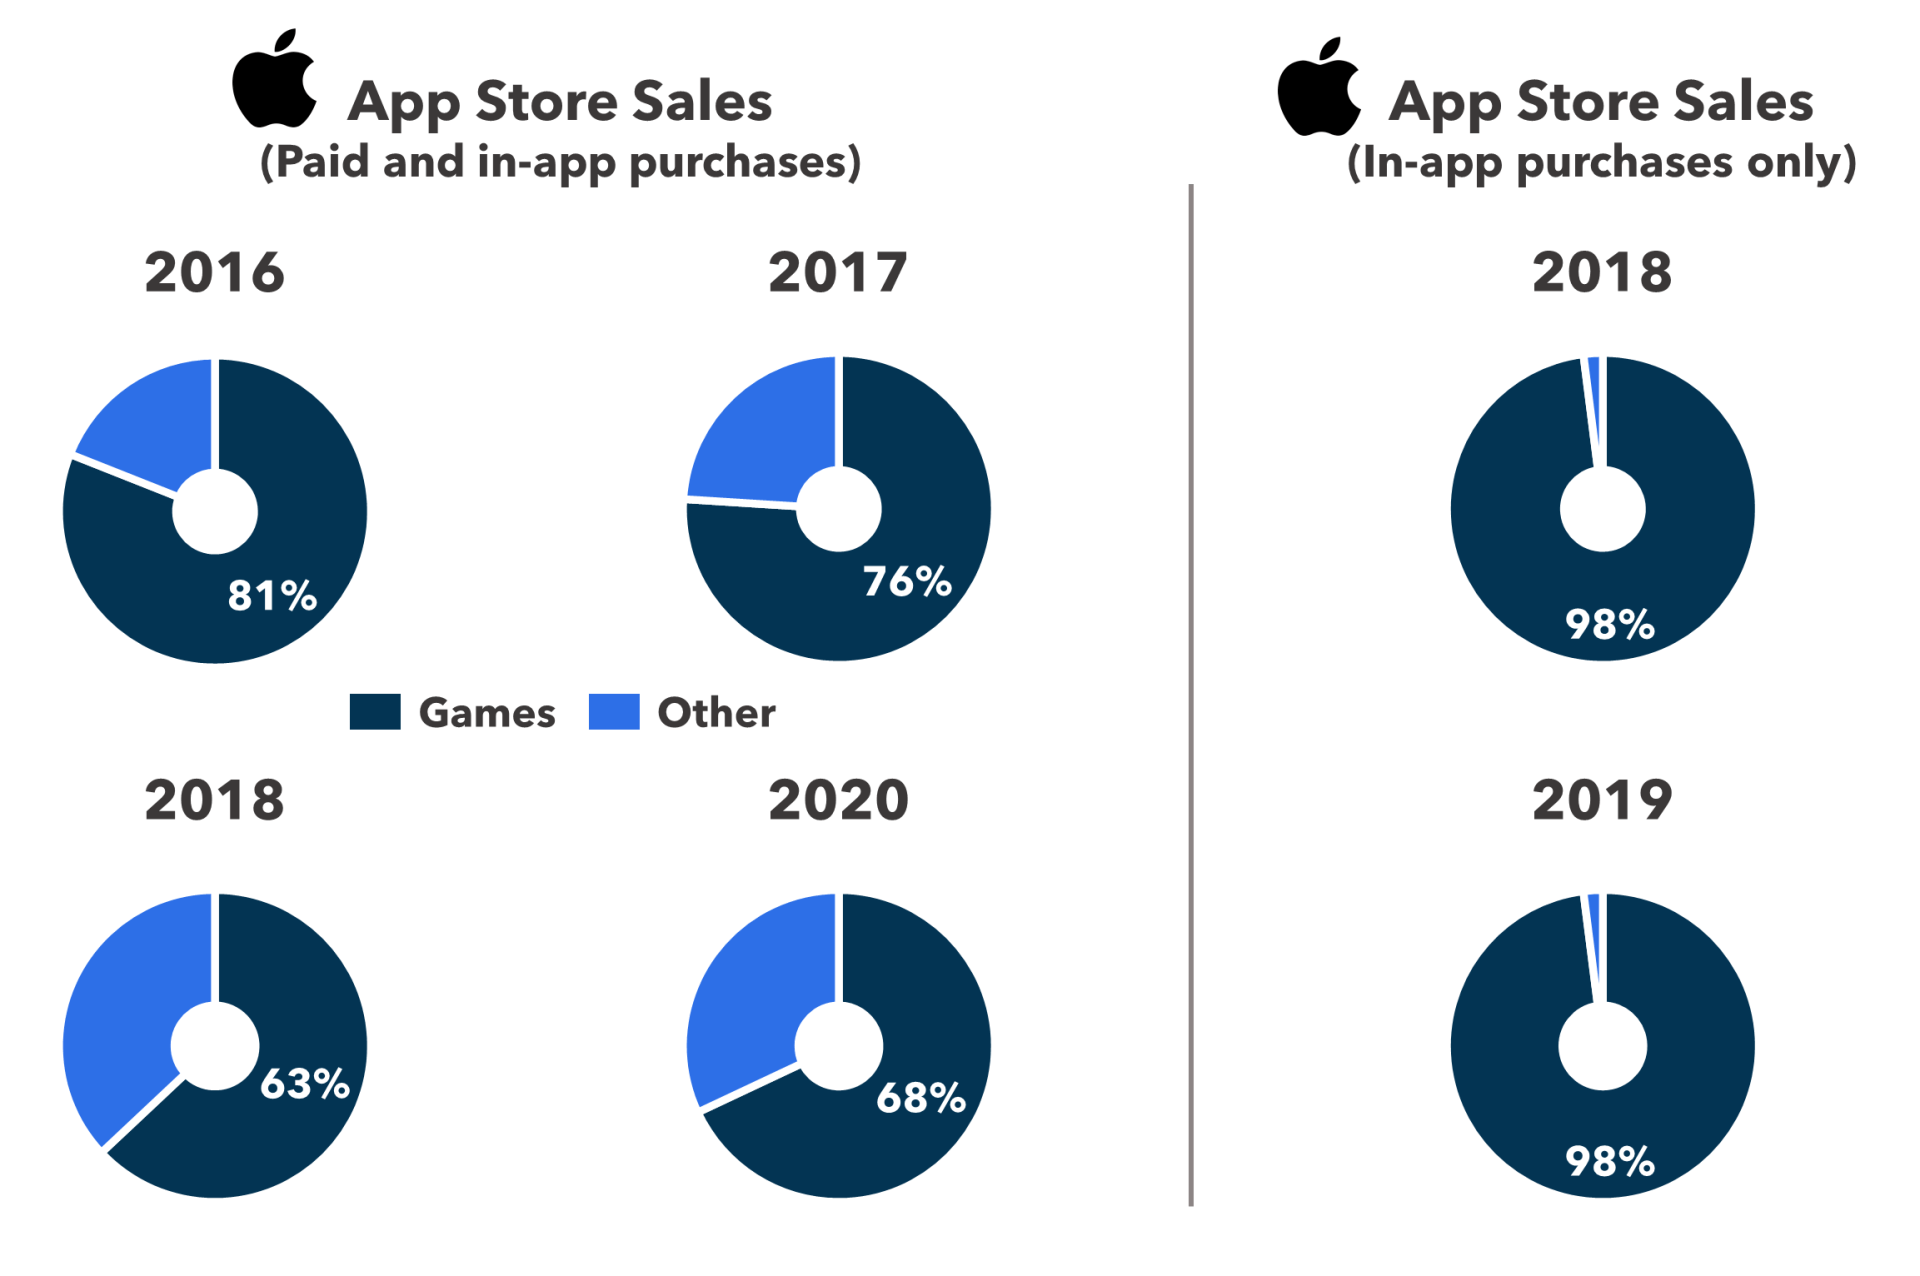 FIGURE 7: App Store Sales